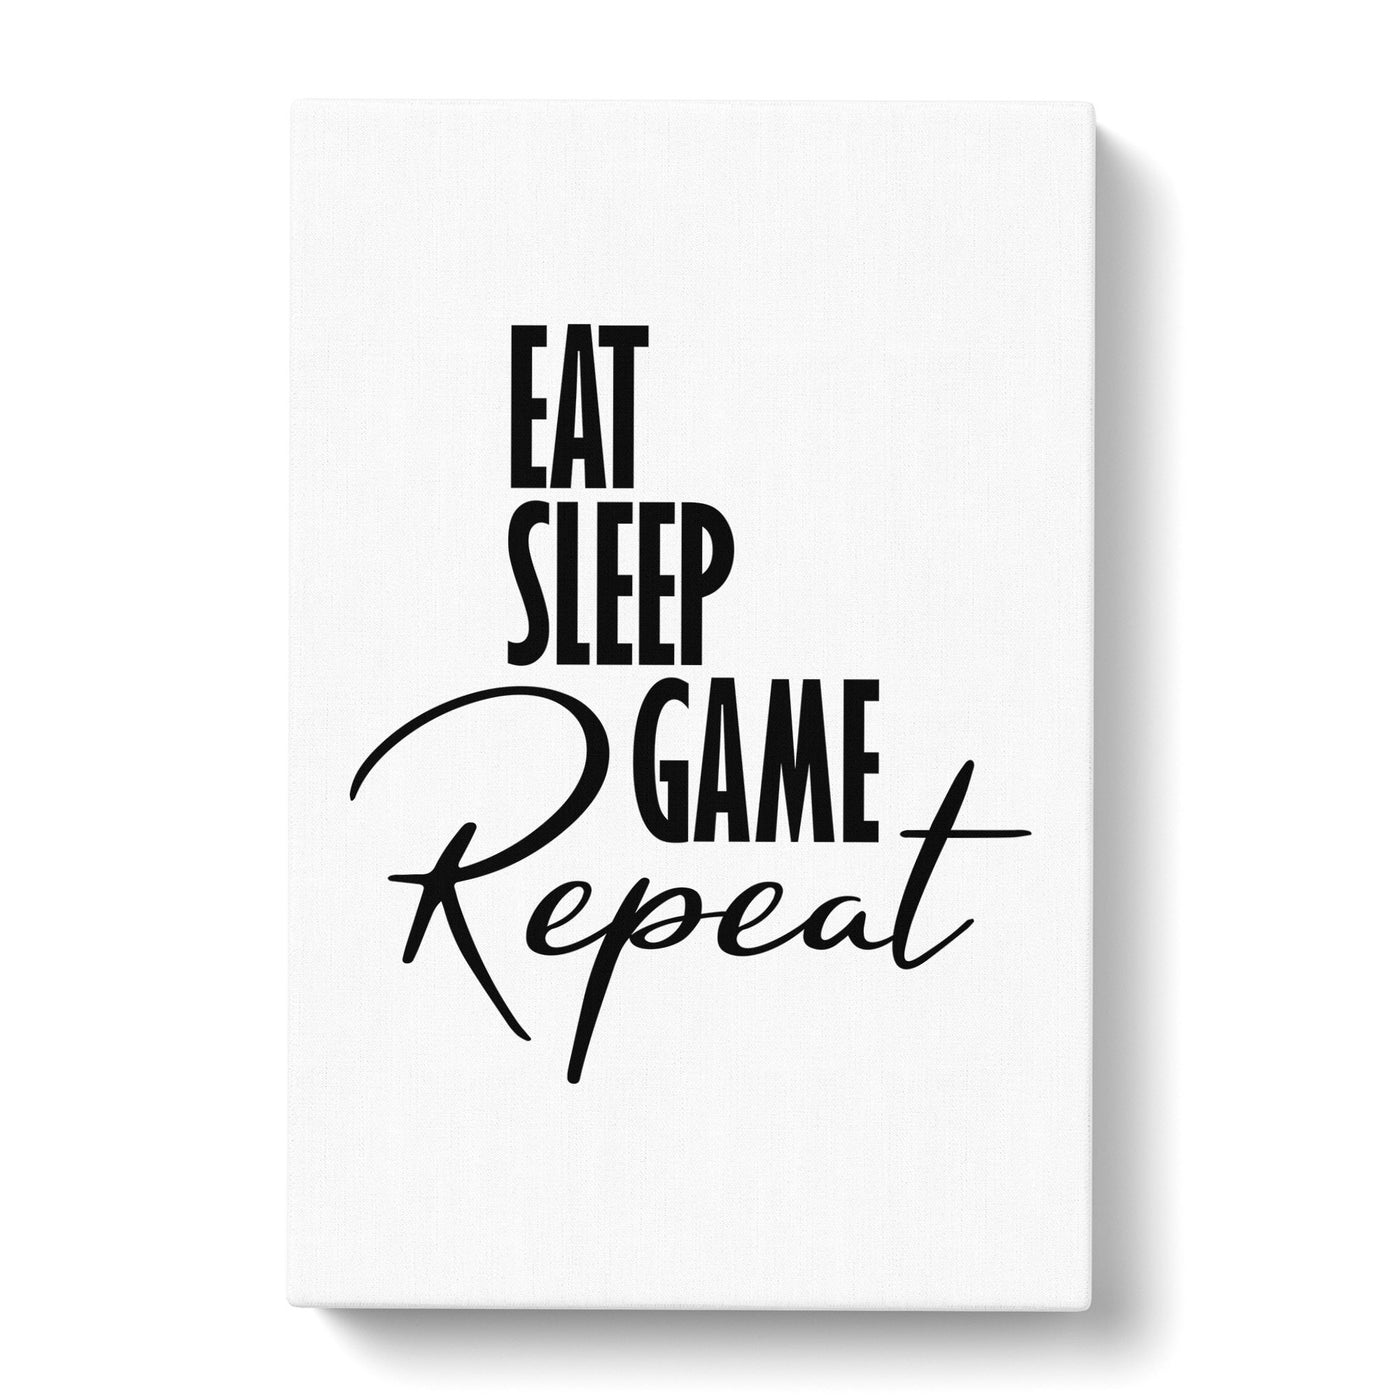 Eat Sleep Game Repeat Typography Canvas Print Main Image